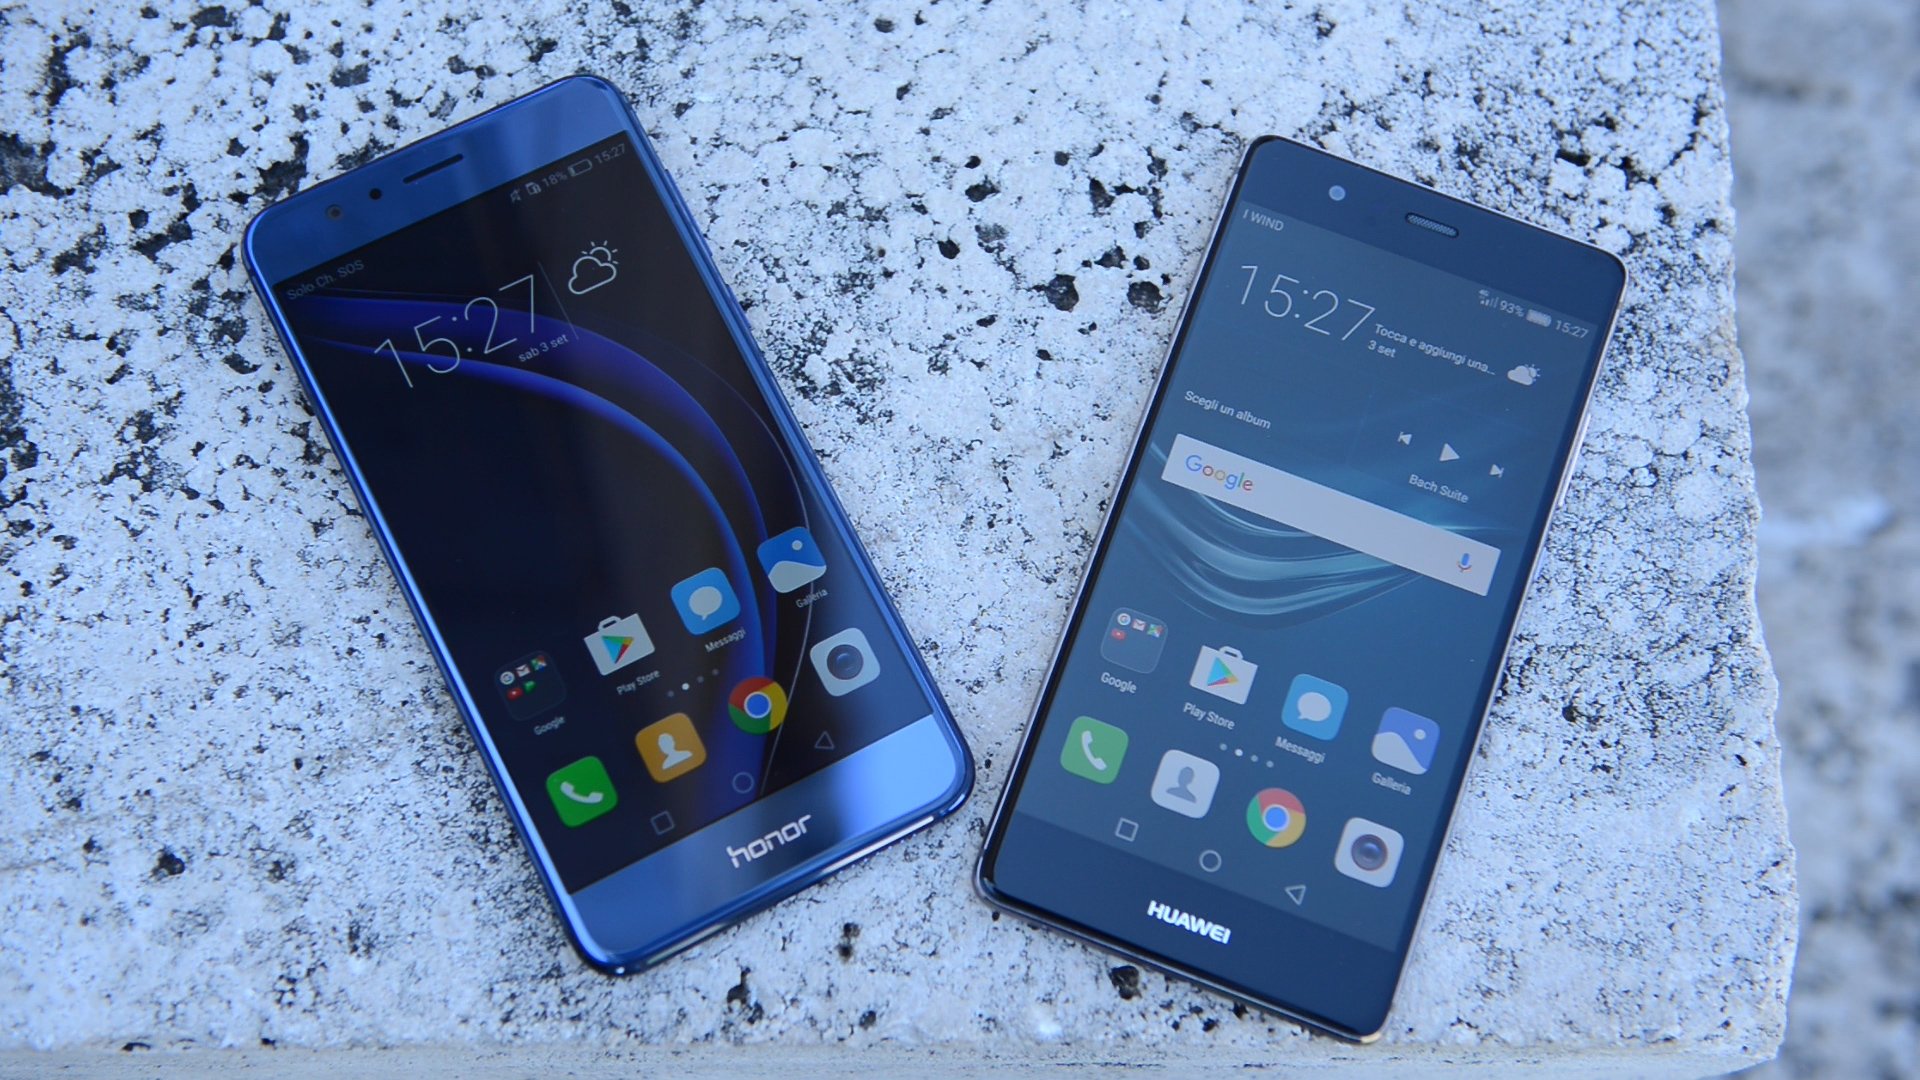 Huawei honor какой лучше. Huawei Honor p9. Honor p9 2016. Хуавей против хонор. Смартфоны Honor vs Huawei.